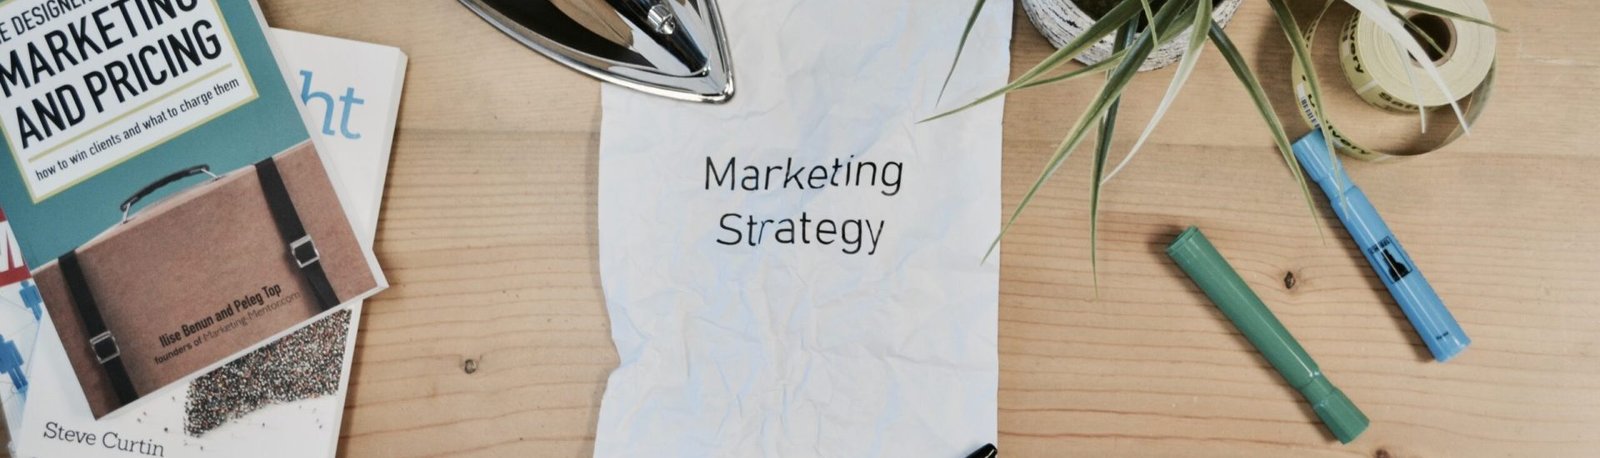 Estrategias de Marketing